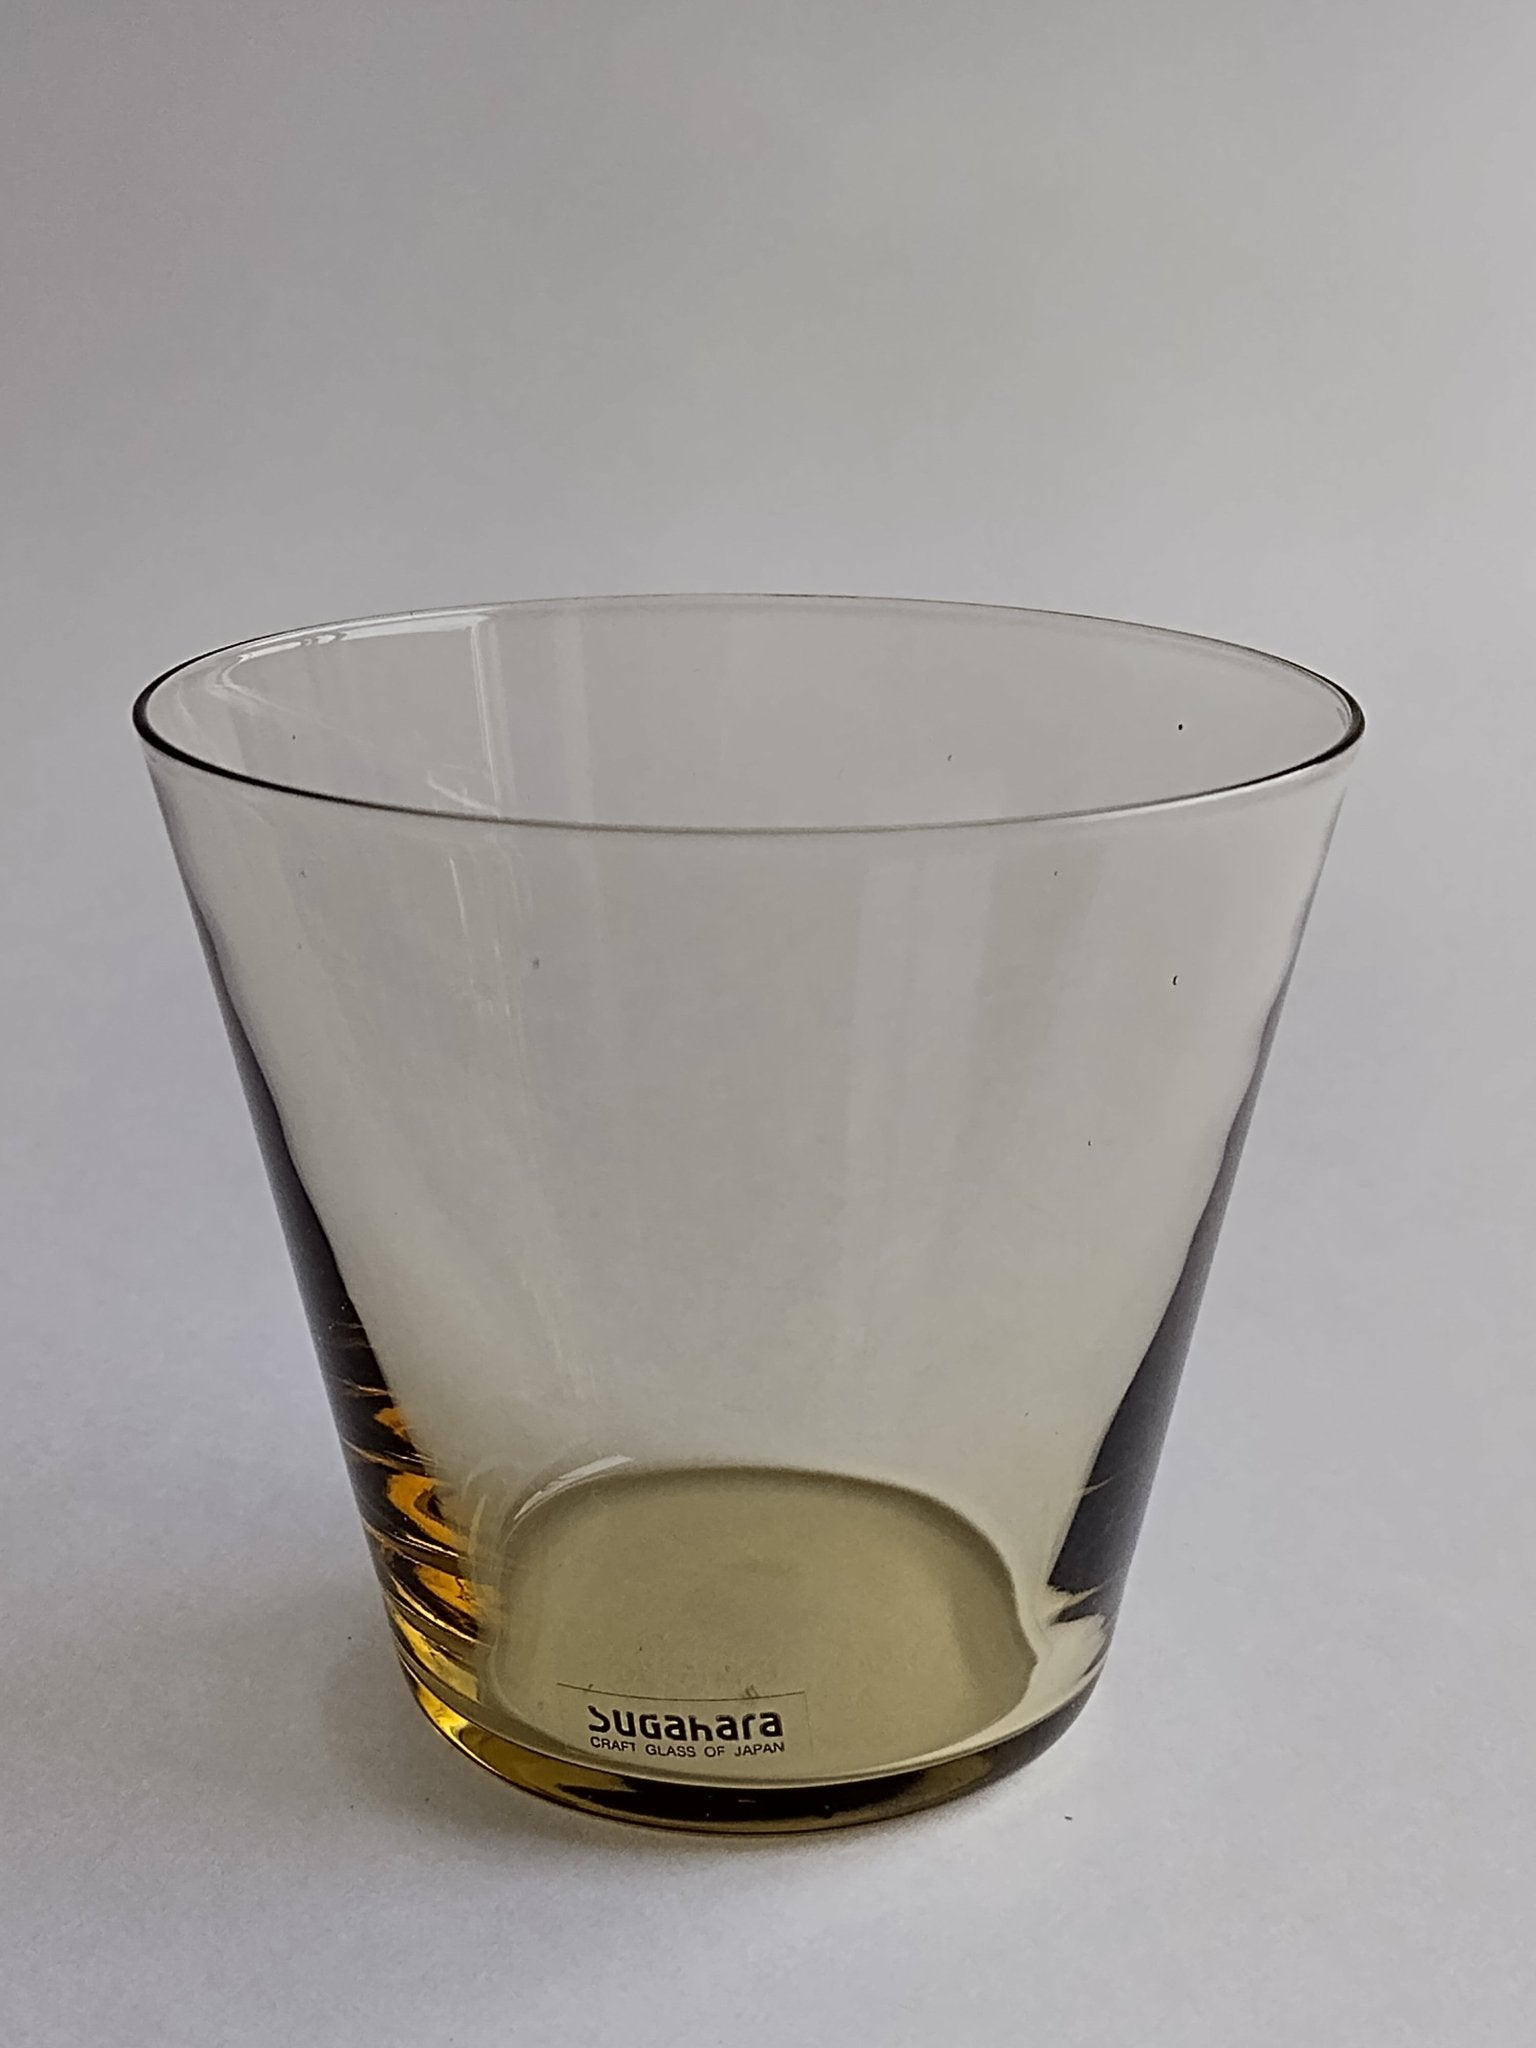 Sugahara-Fifty's universeel retro glas 300ml tan - Schreuder-kraan.shop